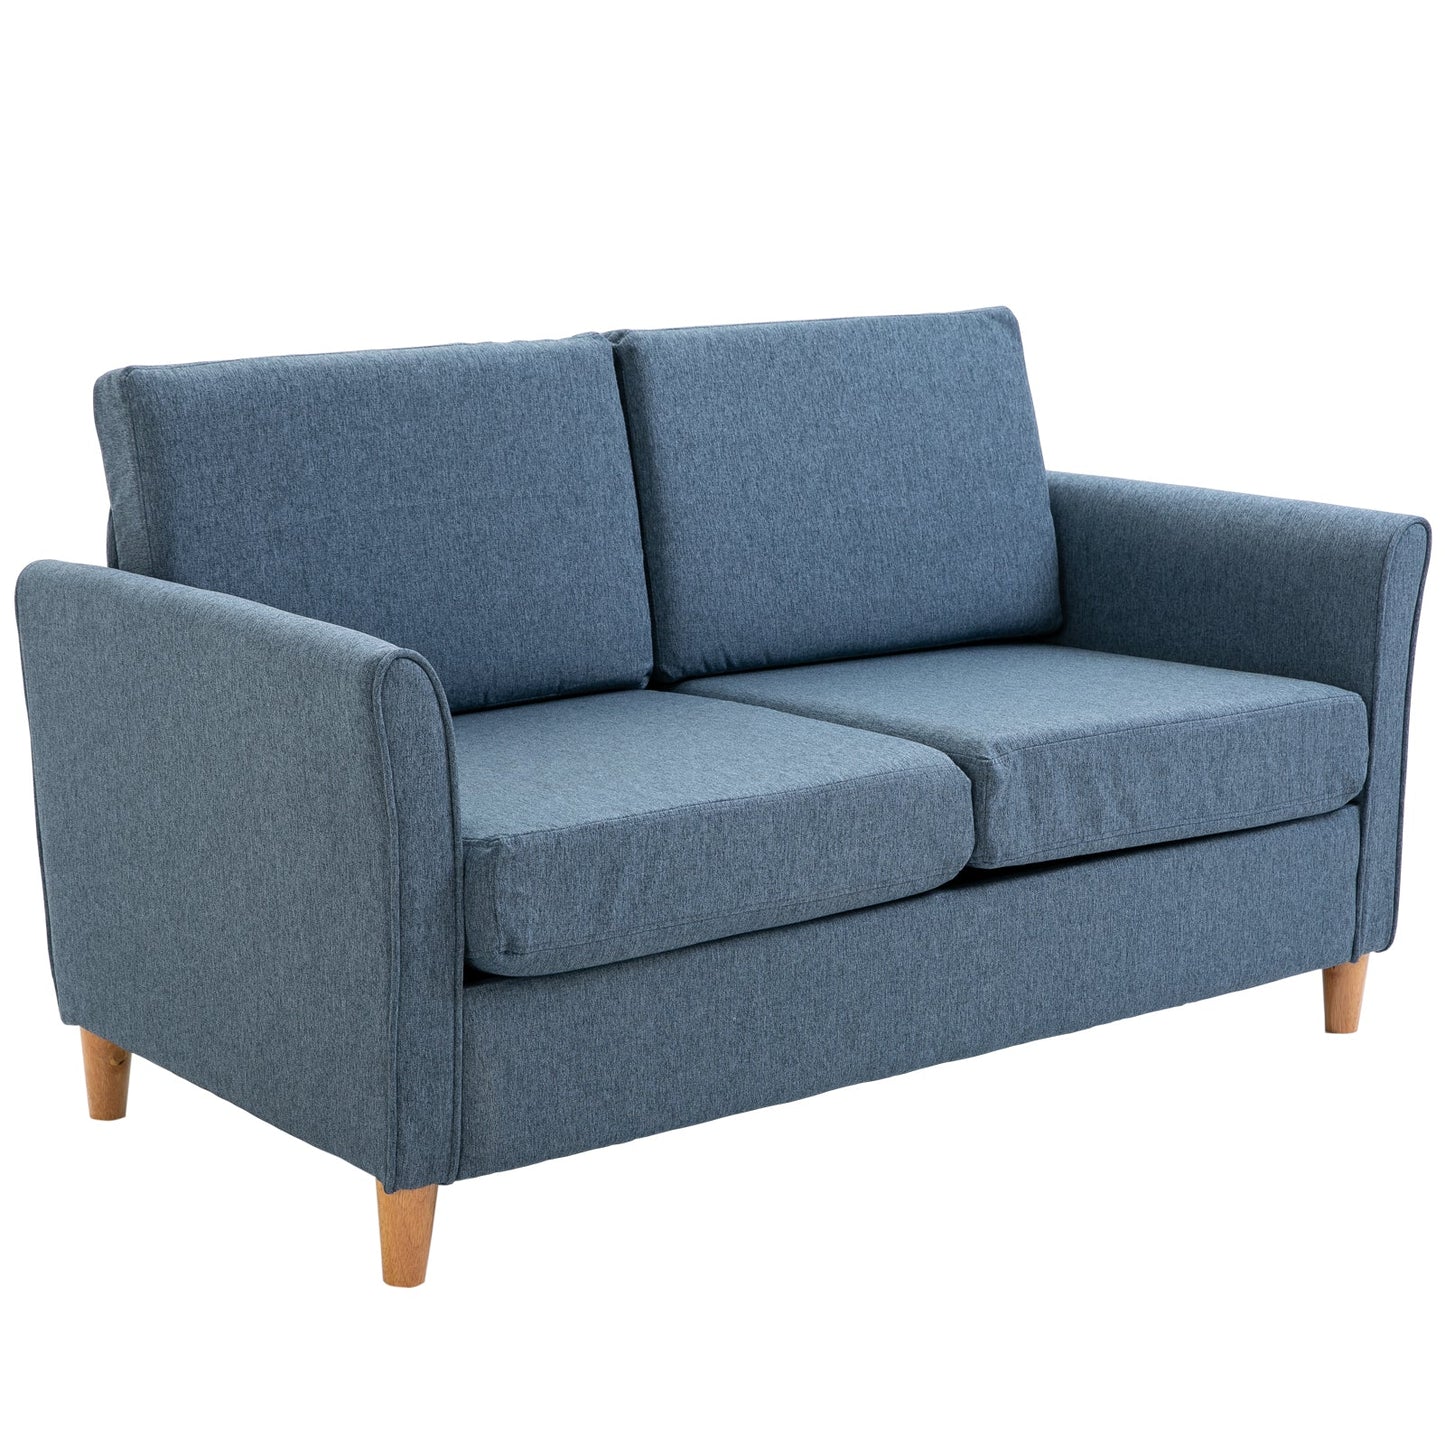 Linen Upholstery 2-Seat Sofa Floor Sofa Living Room Furniture with Armrest Wooden Legs Blue